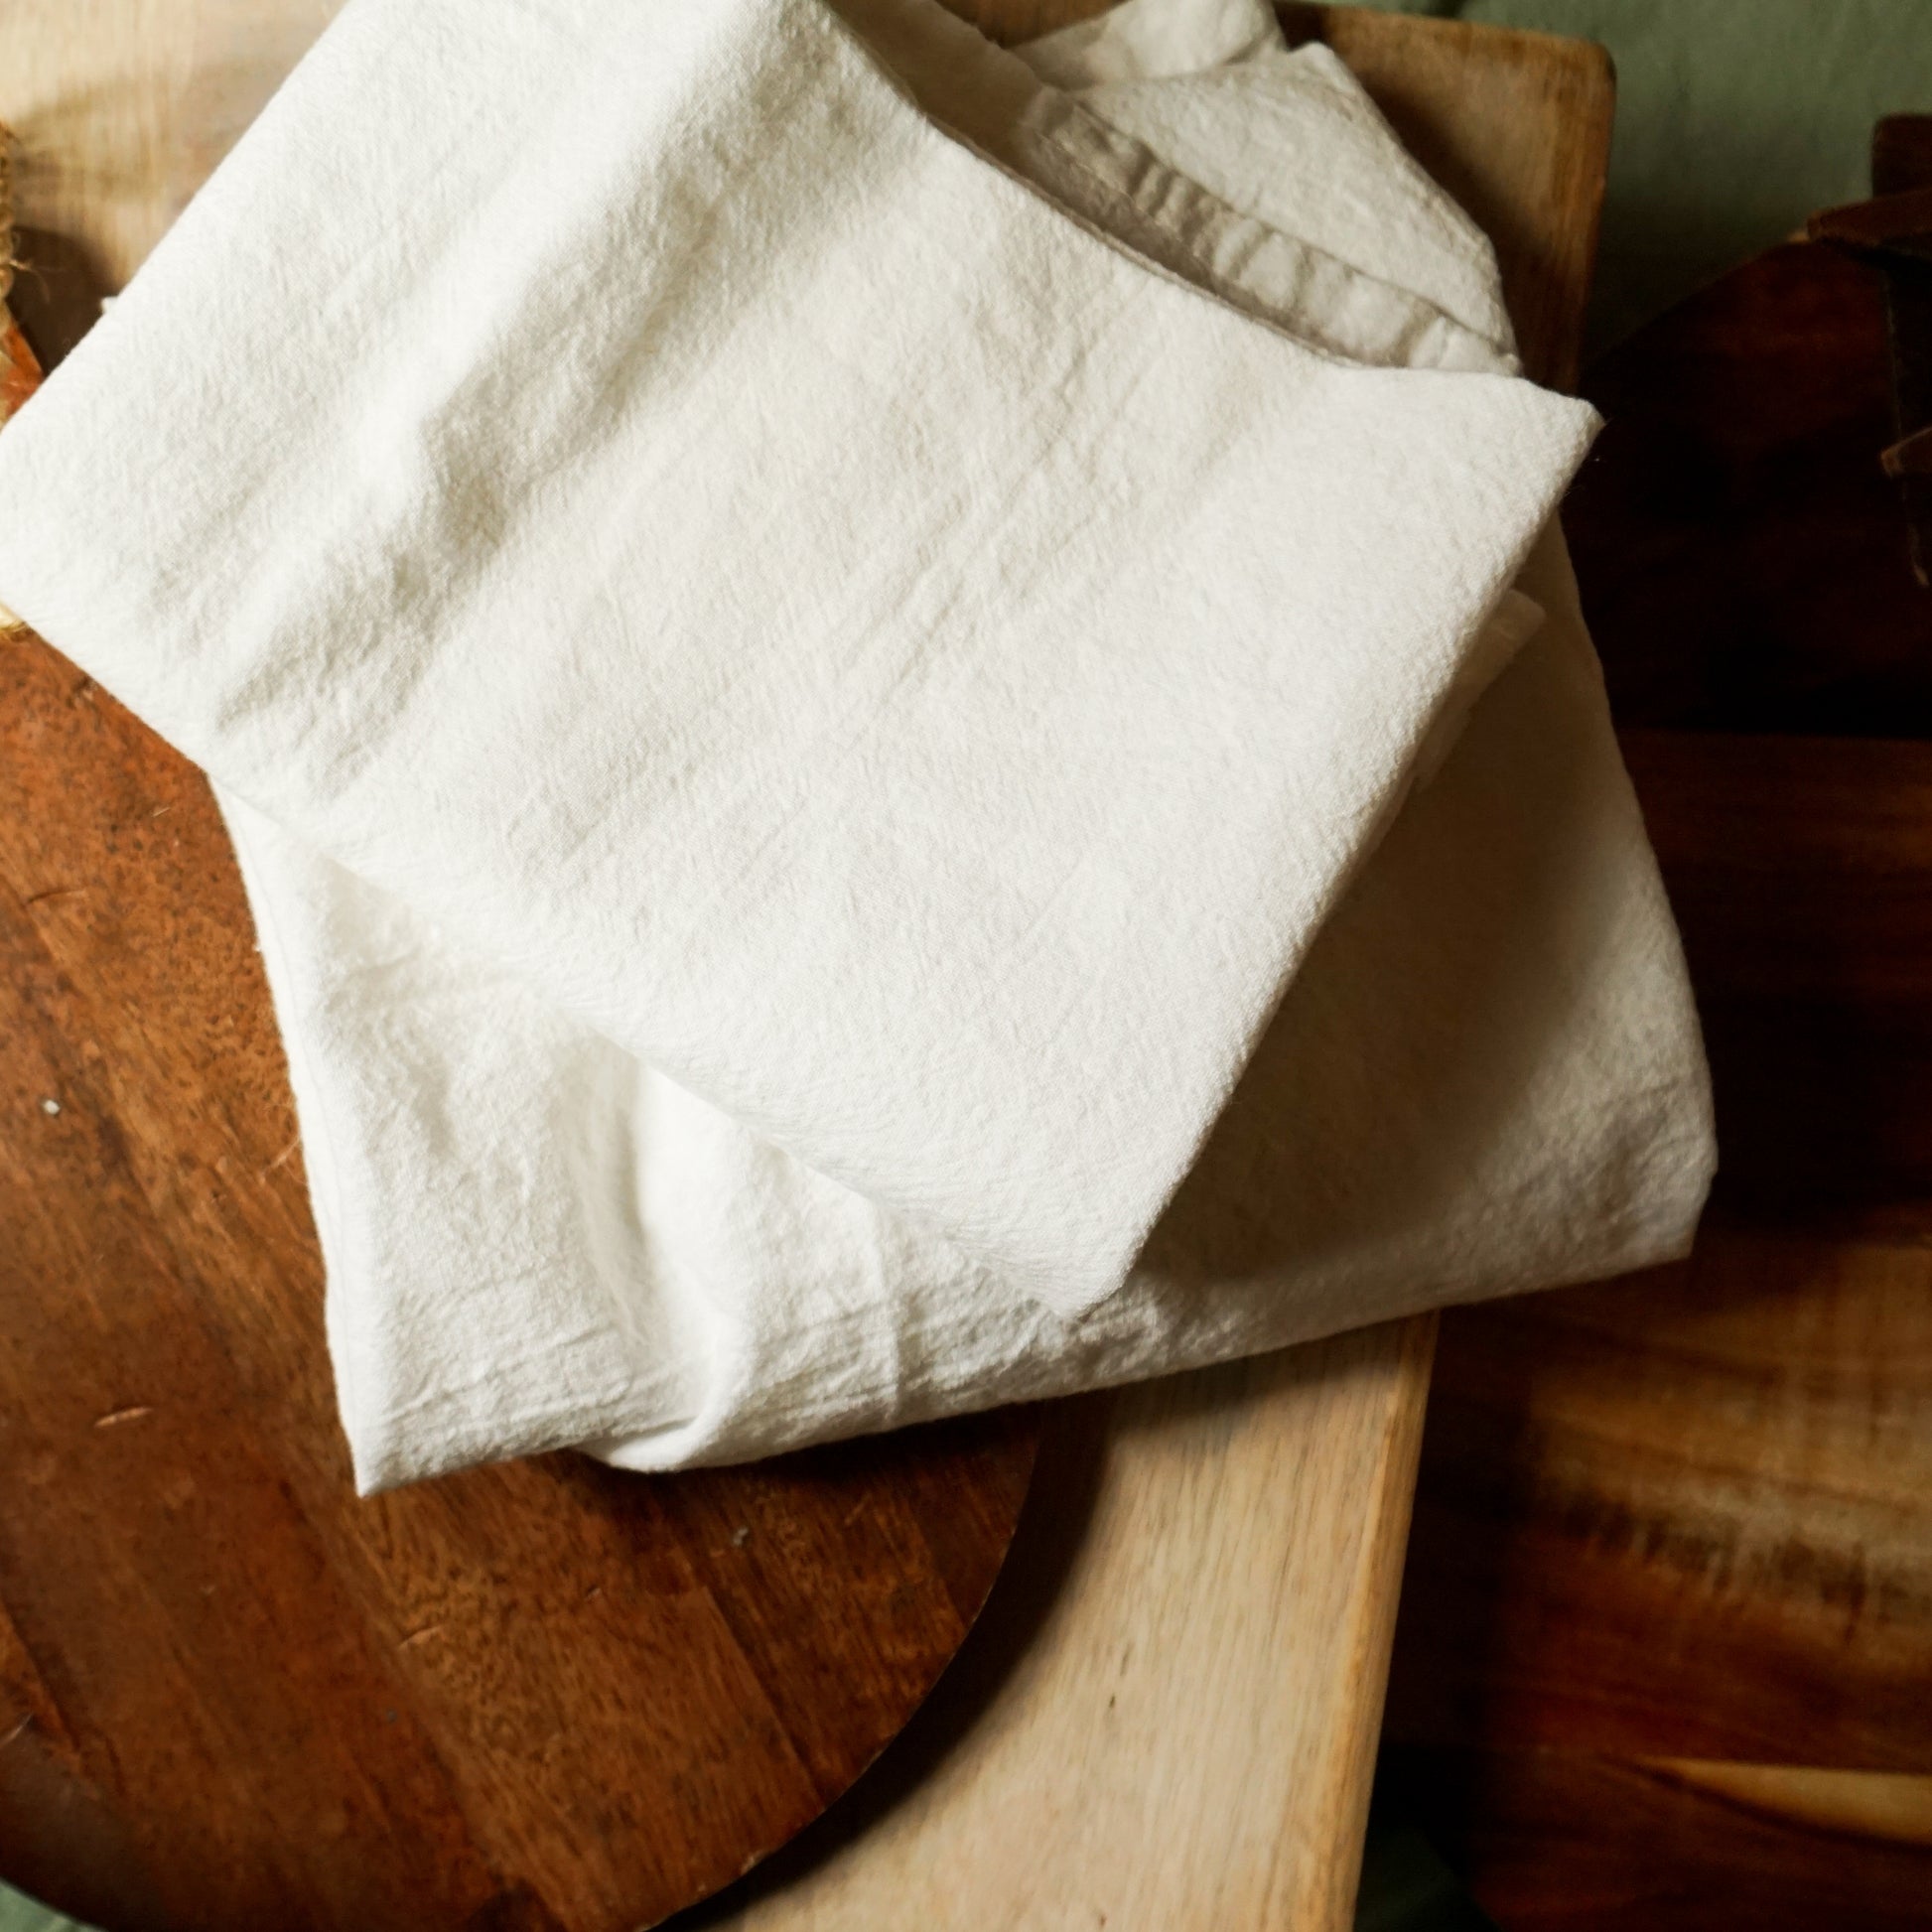 Flour Sack Kitchen Towel 3-Pack